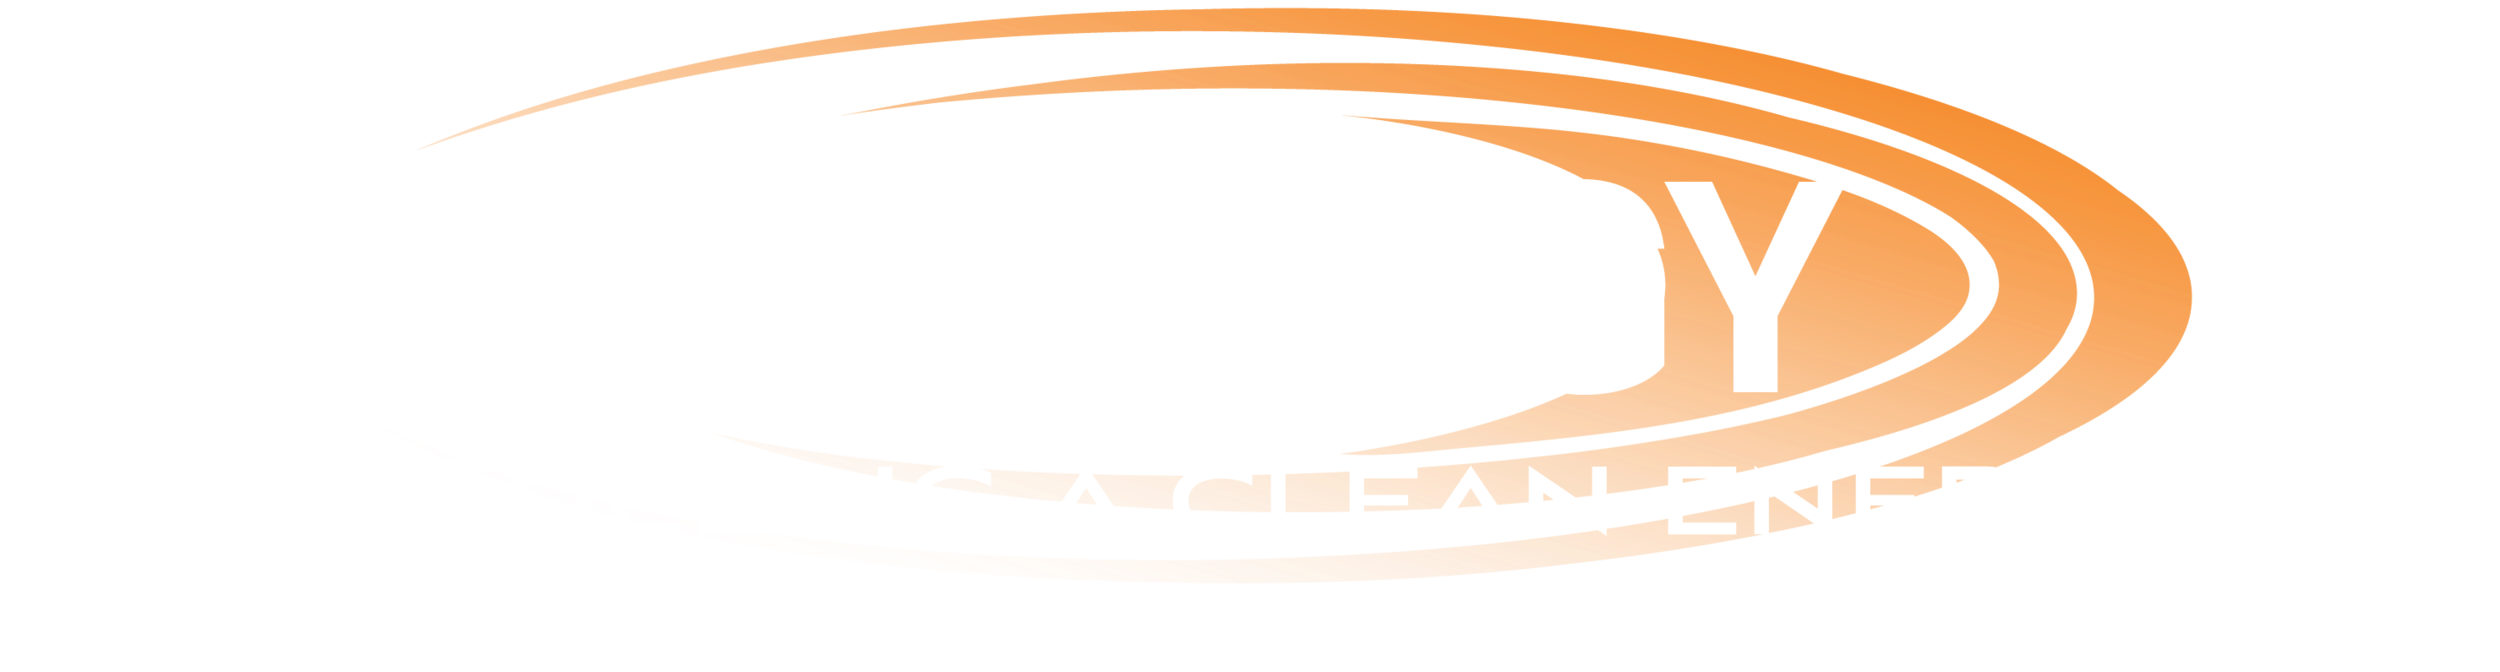 SGH2 Energy